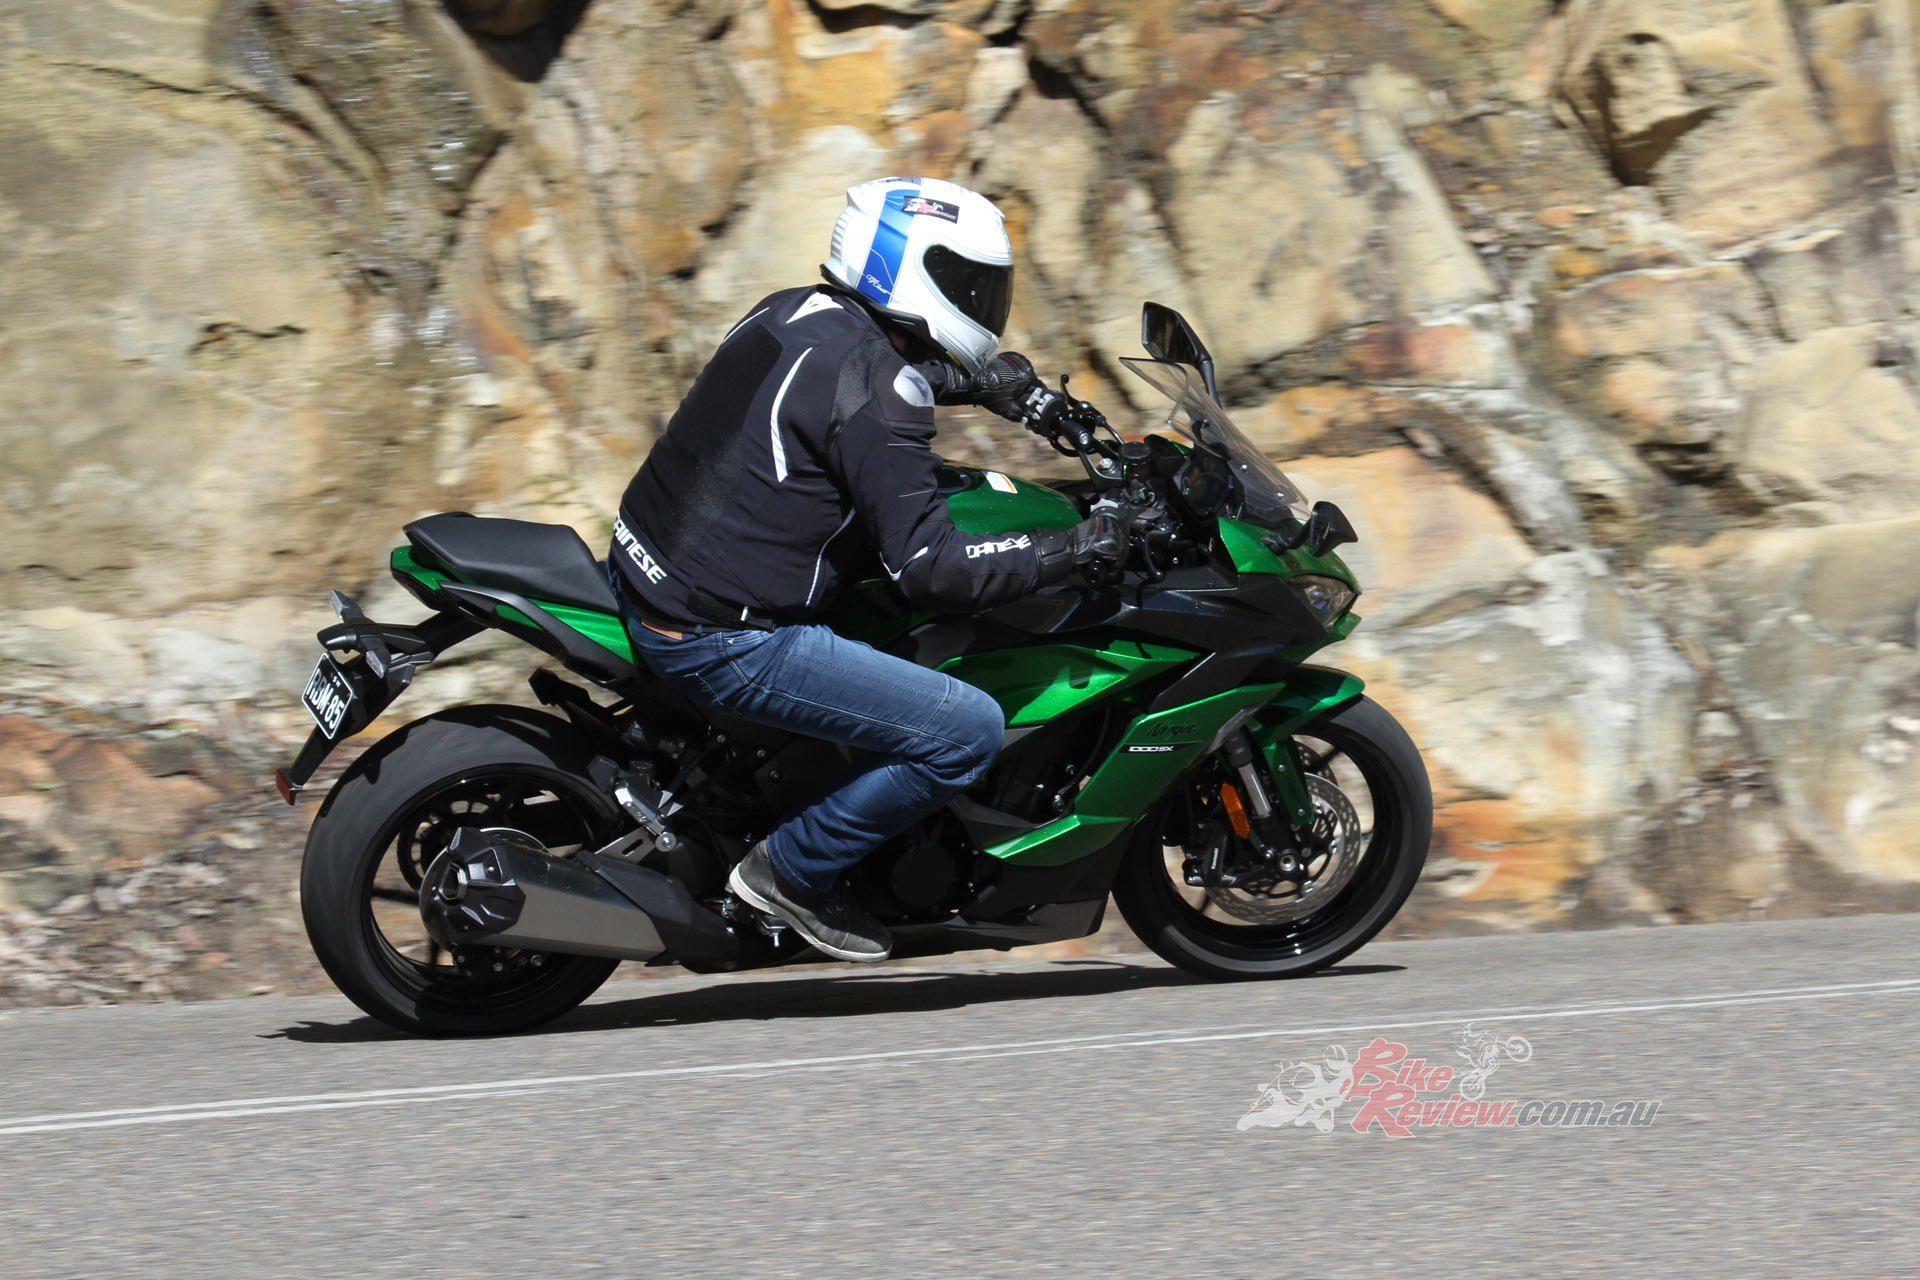 Review: 2011 Kawasaki Ninja 1000